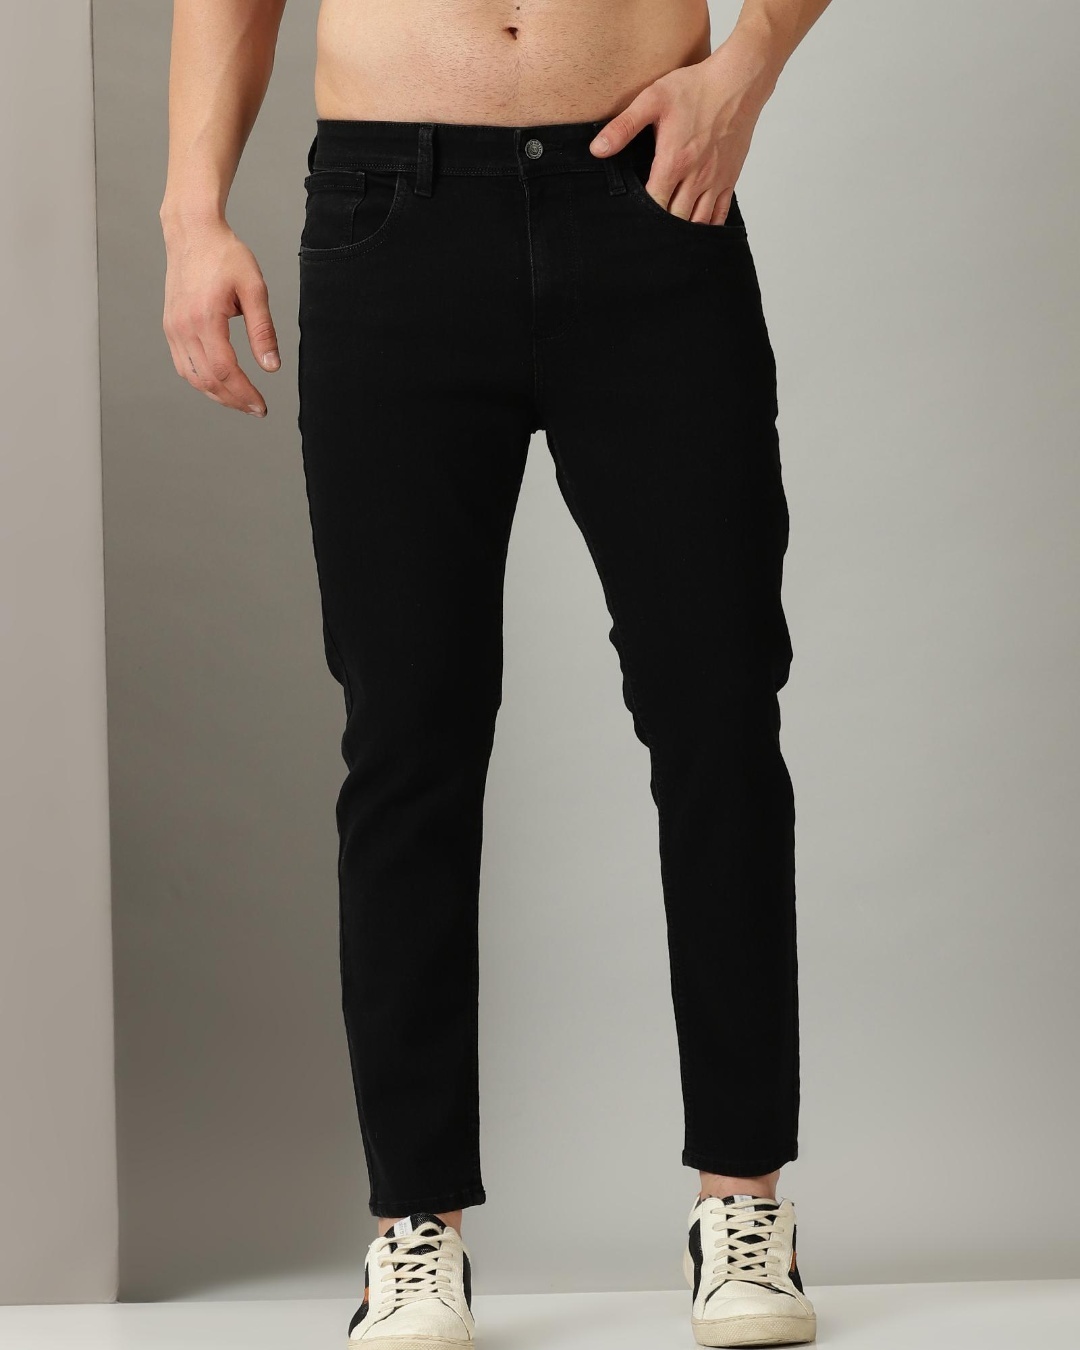 Buy Men's Black Slim Fit Jeans Online at Bewakoof